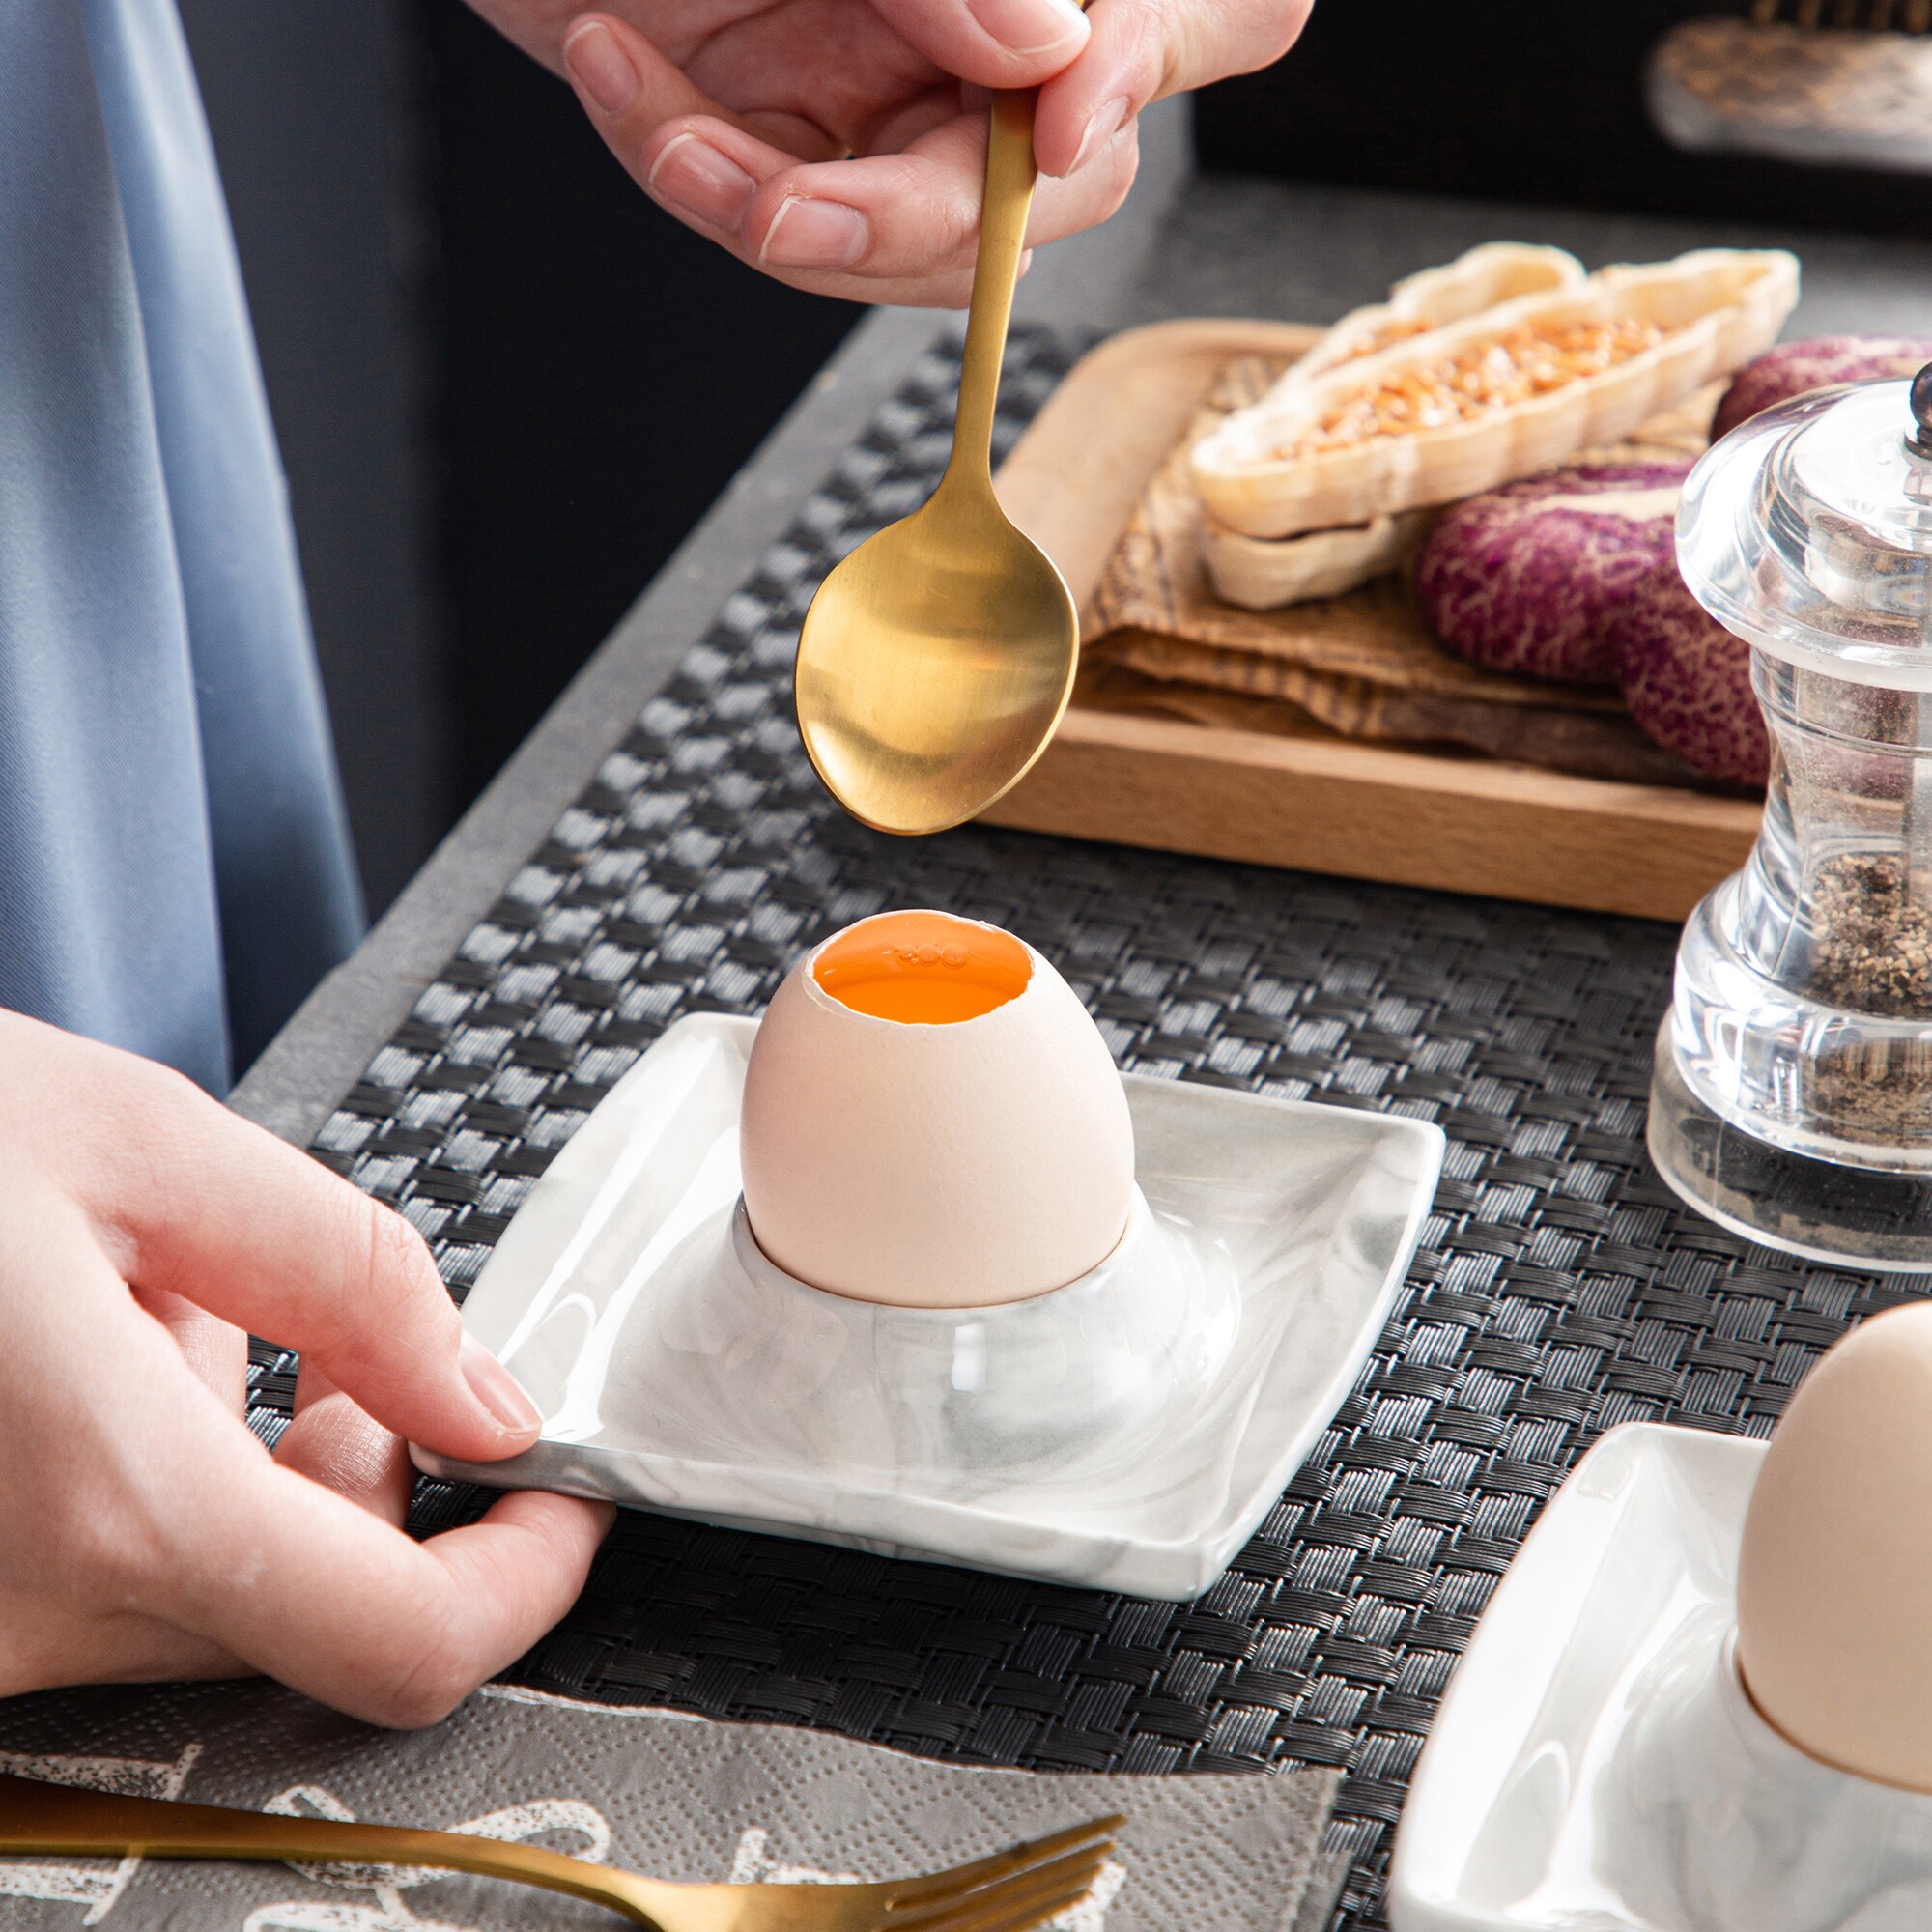 MALACASA Blance Marble Grey Porcelain Dinnerware Set with Cups